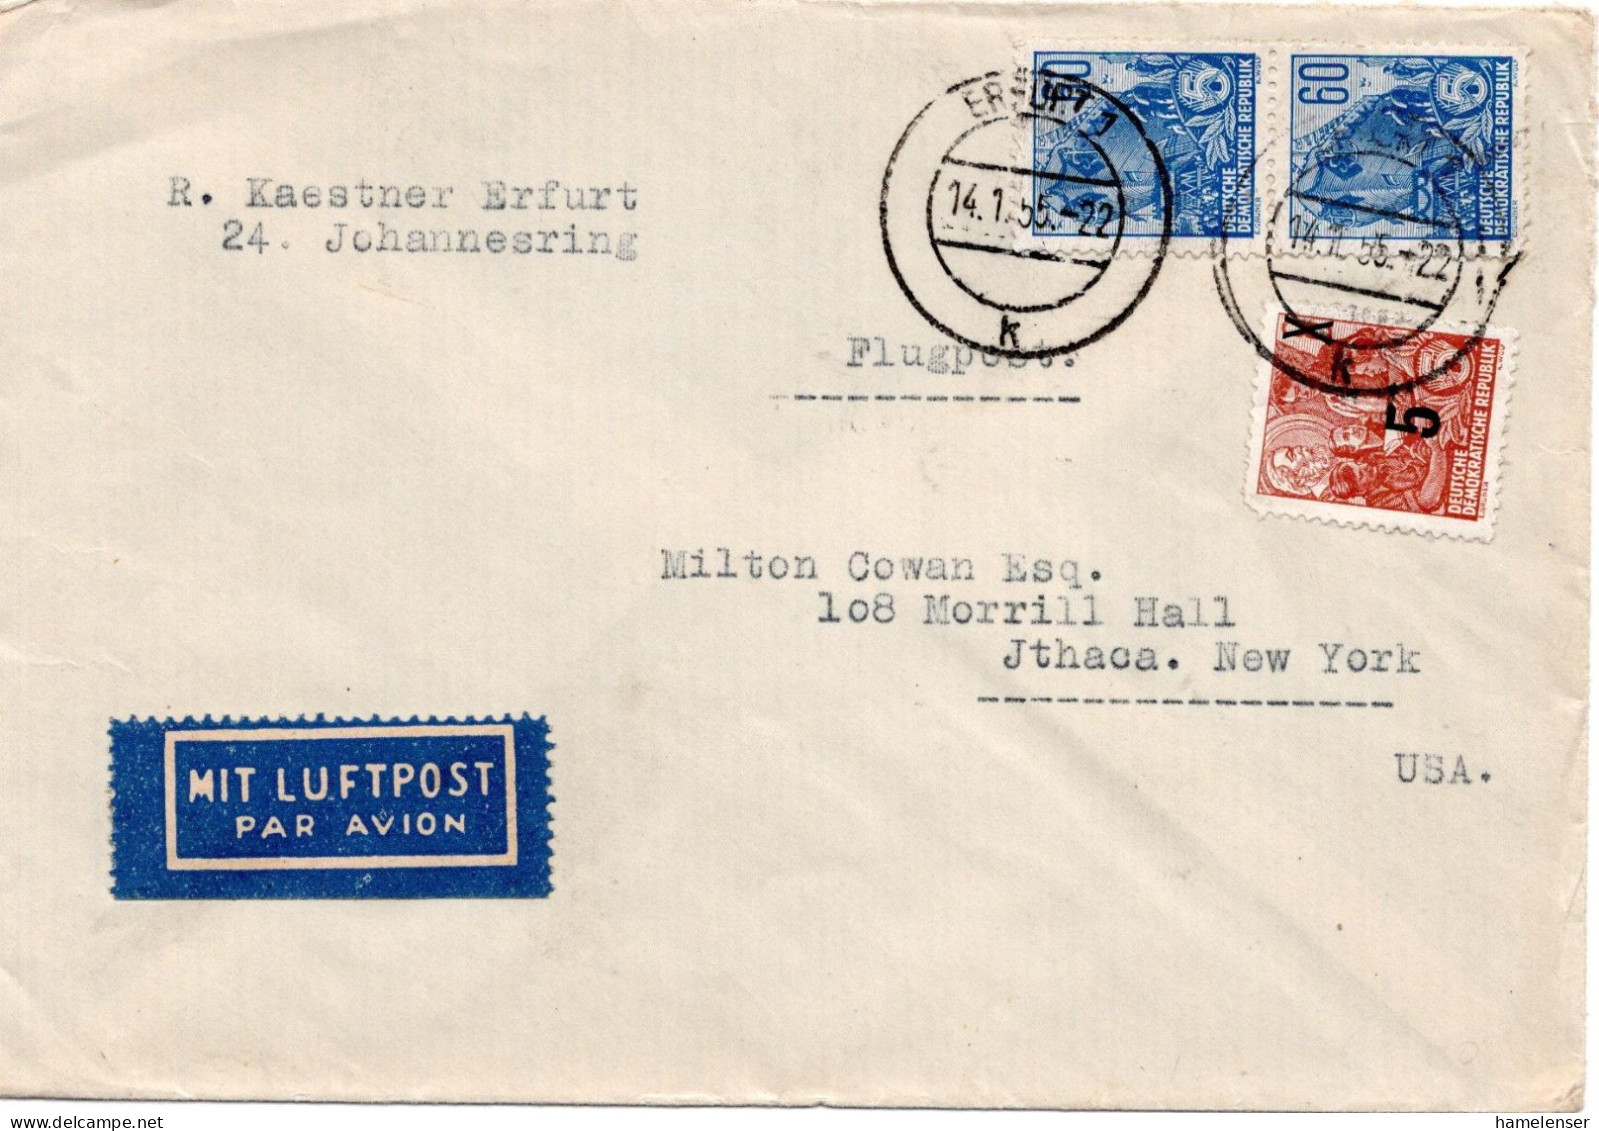 75071 - DDR - 1955 - 2@60Pfg Fuenfjahrplan MiF A LpBf ERFURT -> Ithaca, NY (USA) - Brieven En Documenten